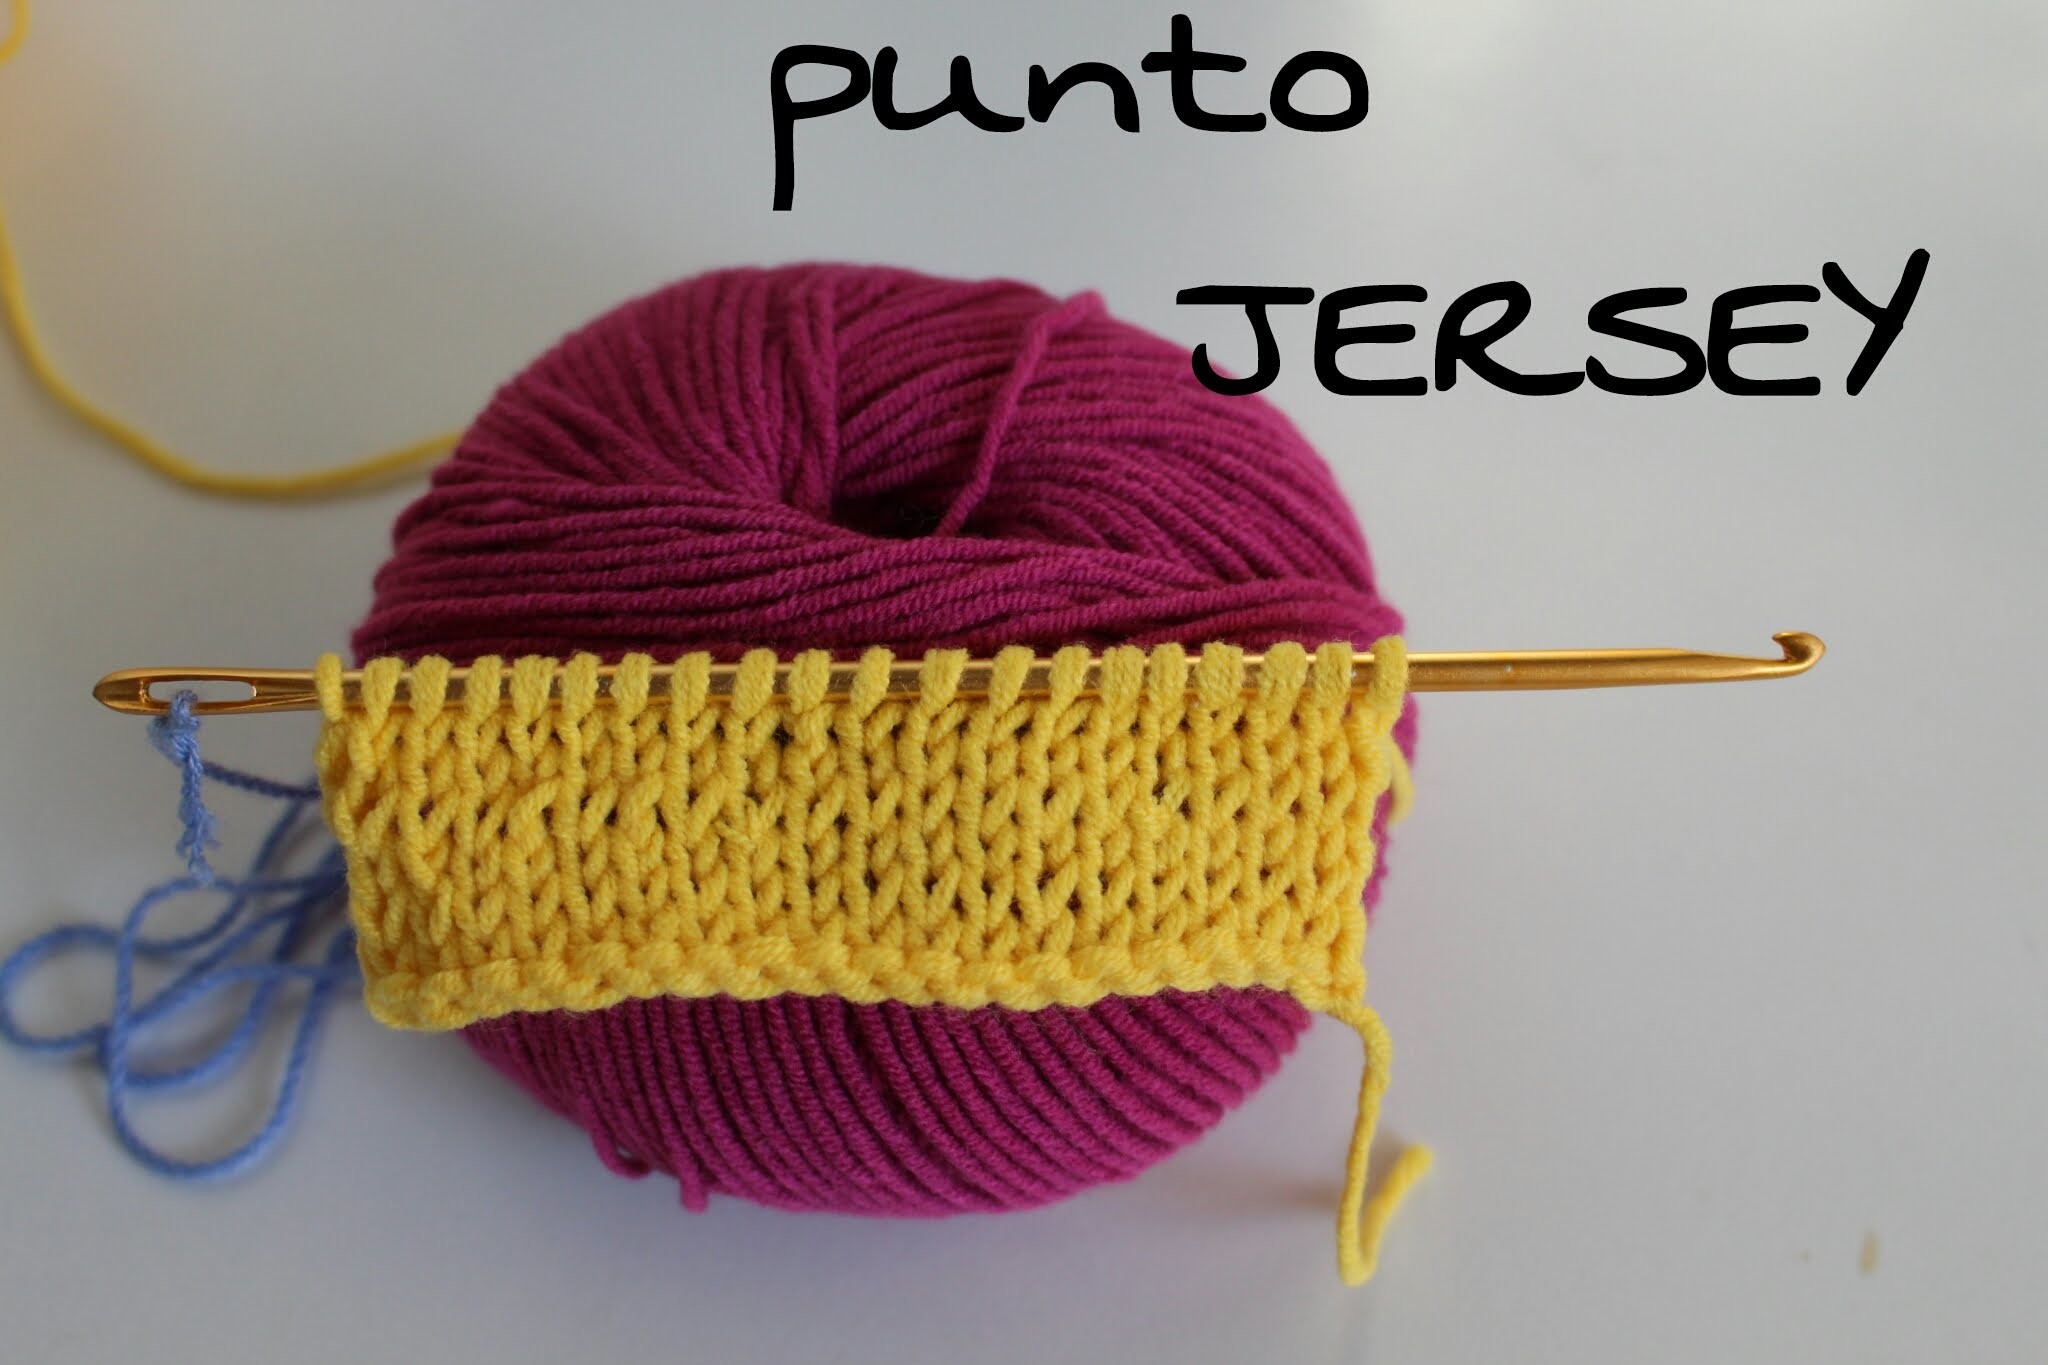 Punto Jersey paso a paso Ganchillo (Crochet ) # KNOOKING#